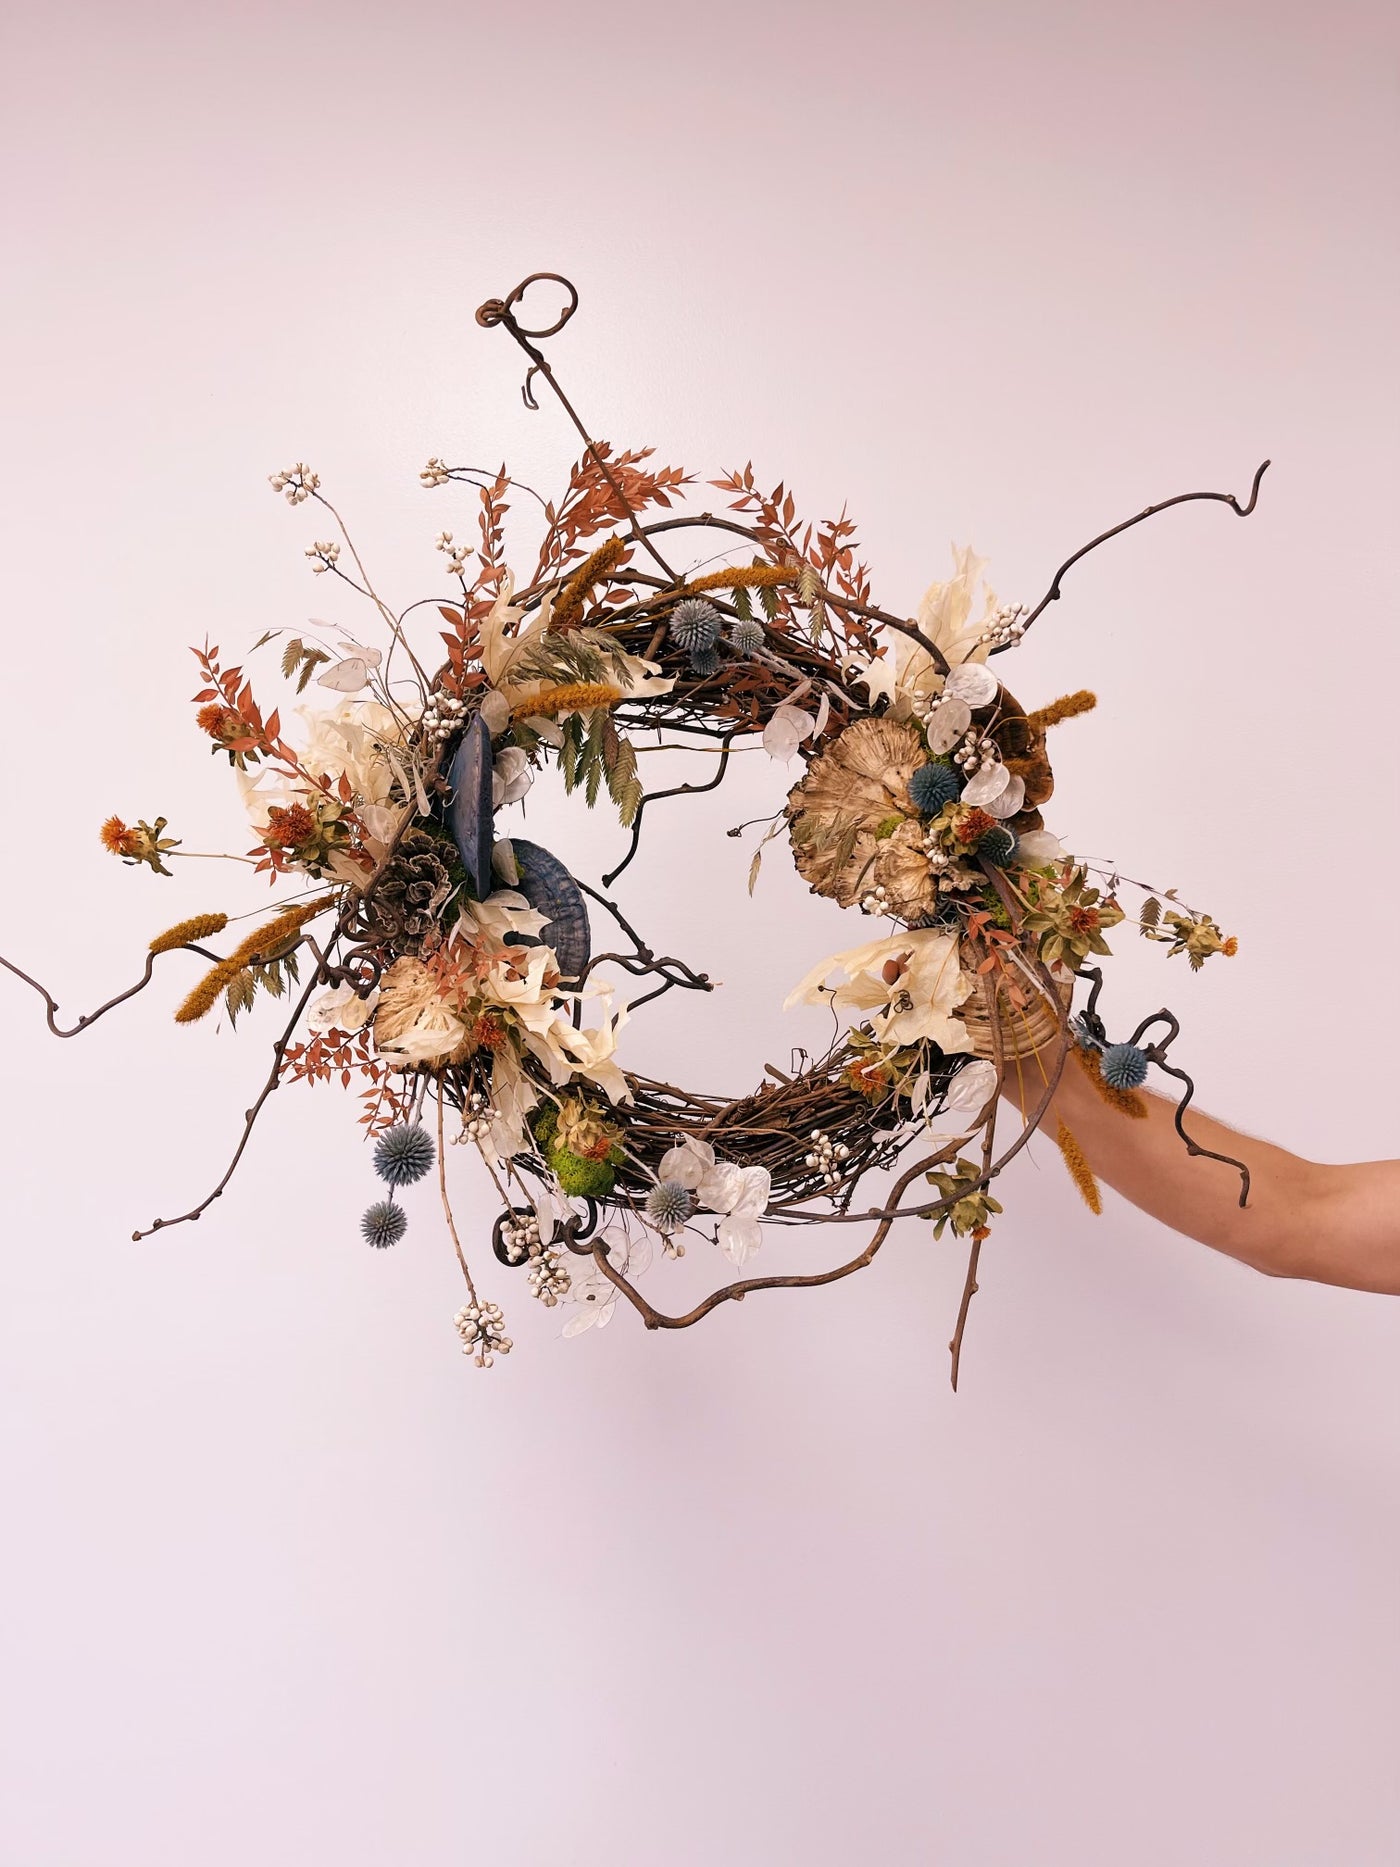 Designer's Choice Seasonal Wreath Subscription - Pickup